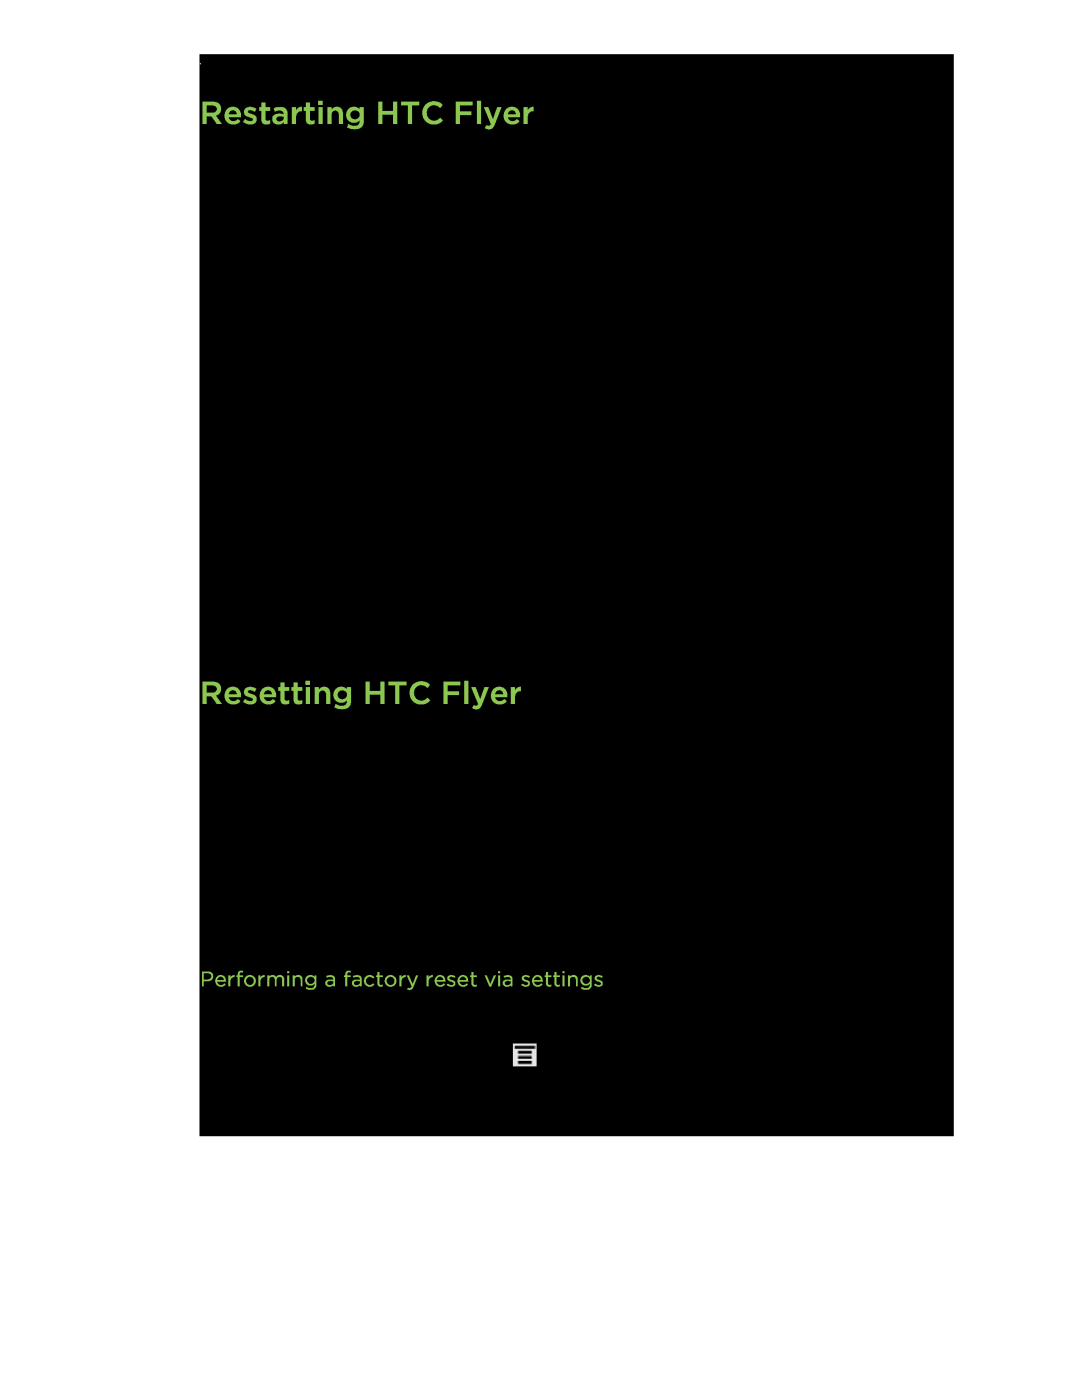 HTC HTCFlyerP512 manual Restarting HTC Flyer, Resetting HTC Flyer, HTC Flyer not responding? 